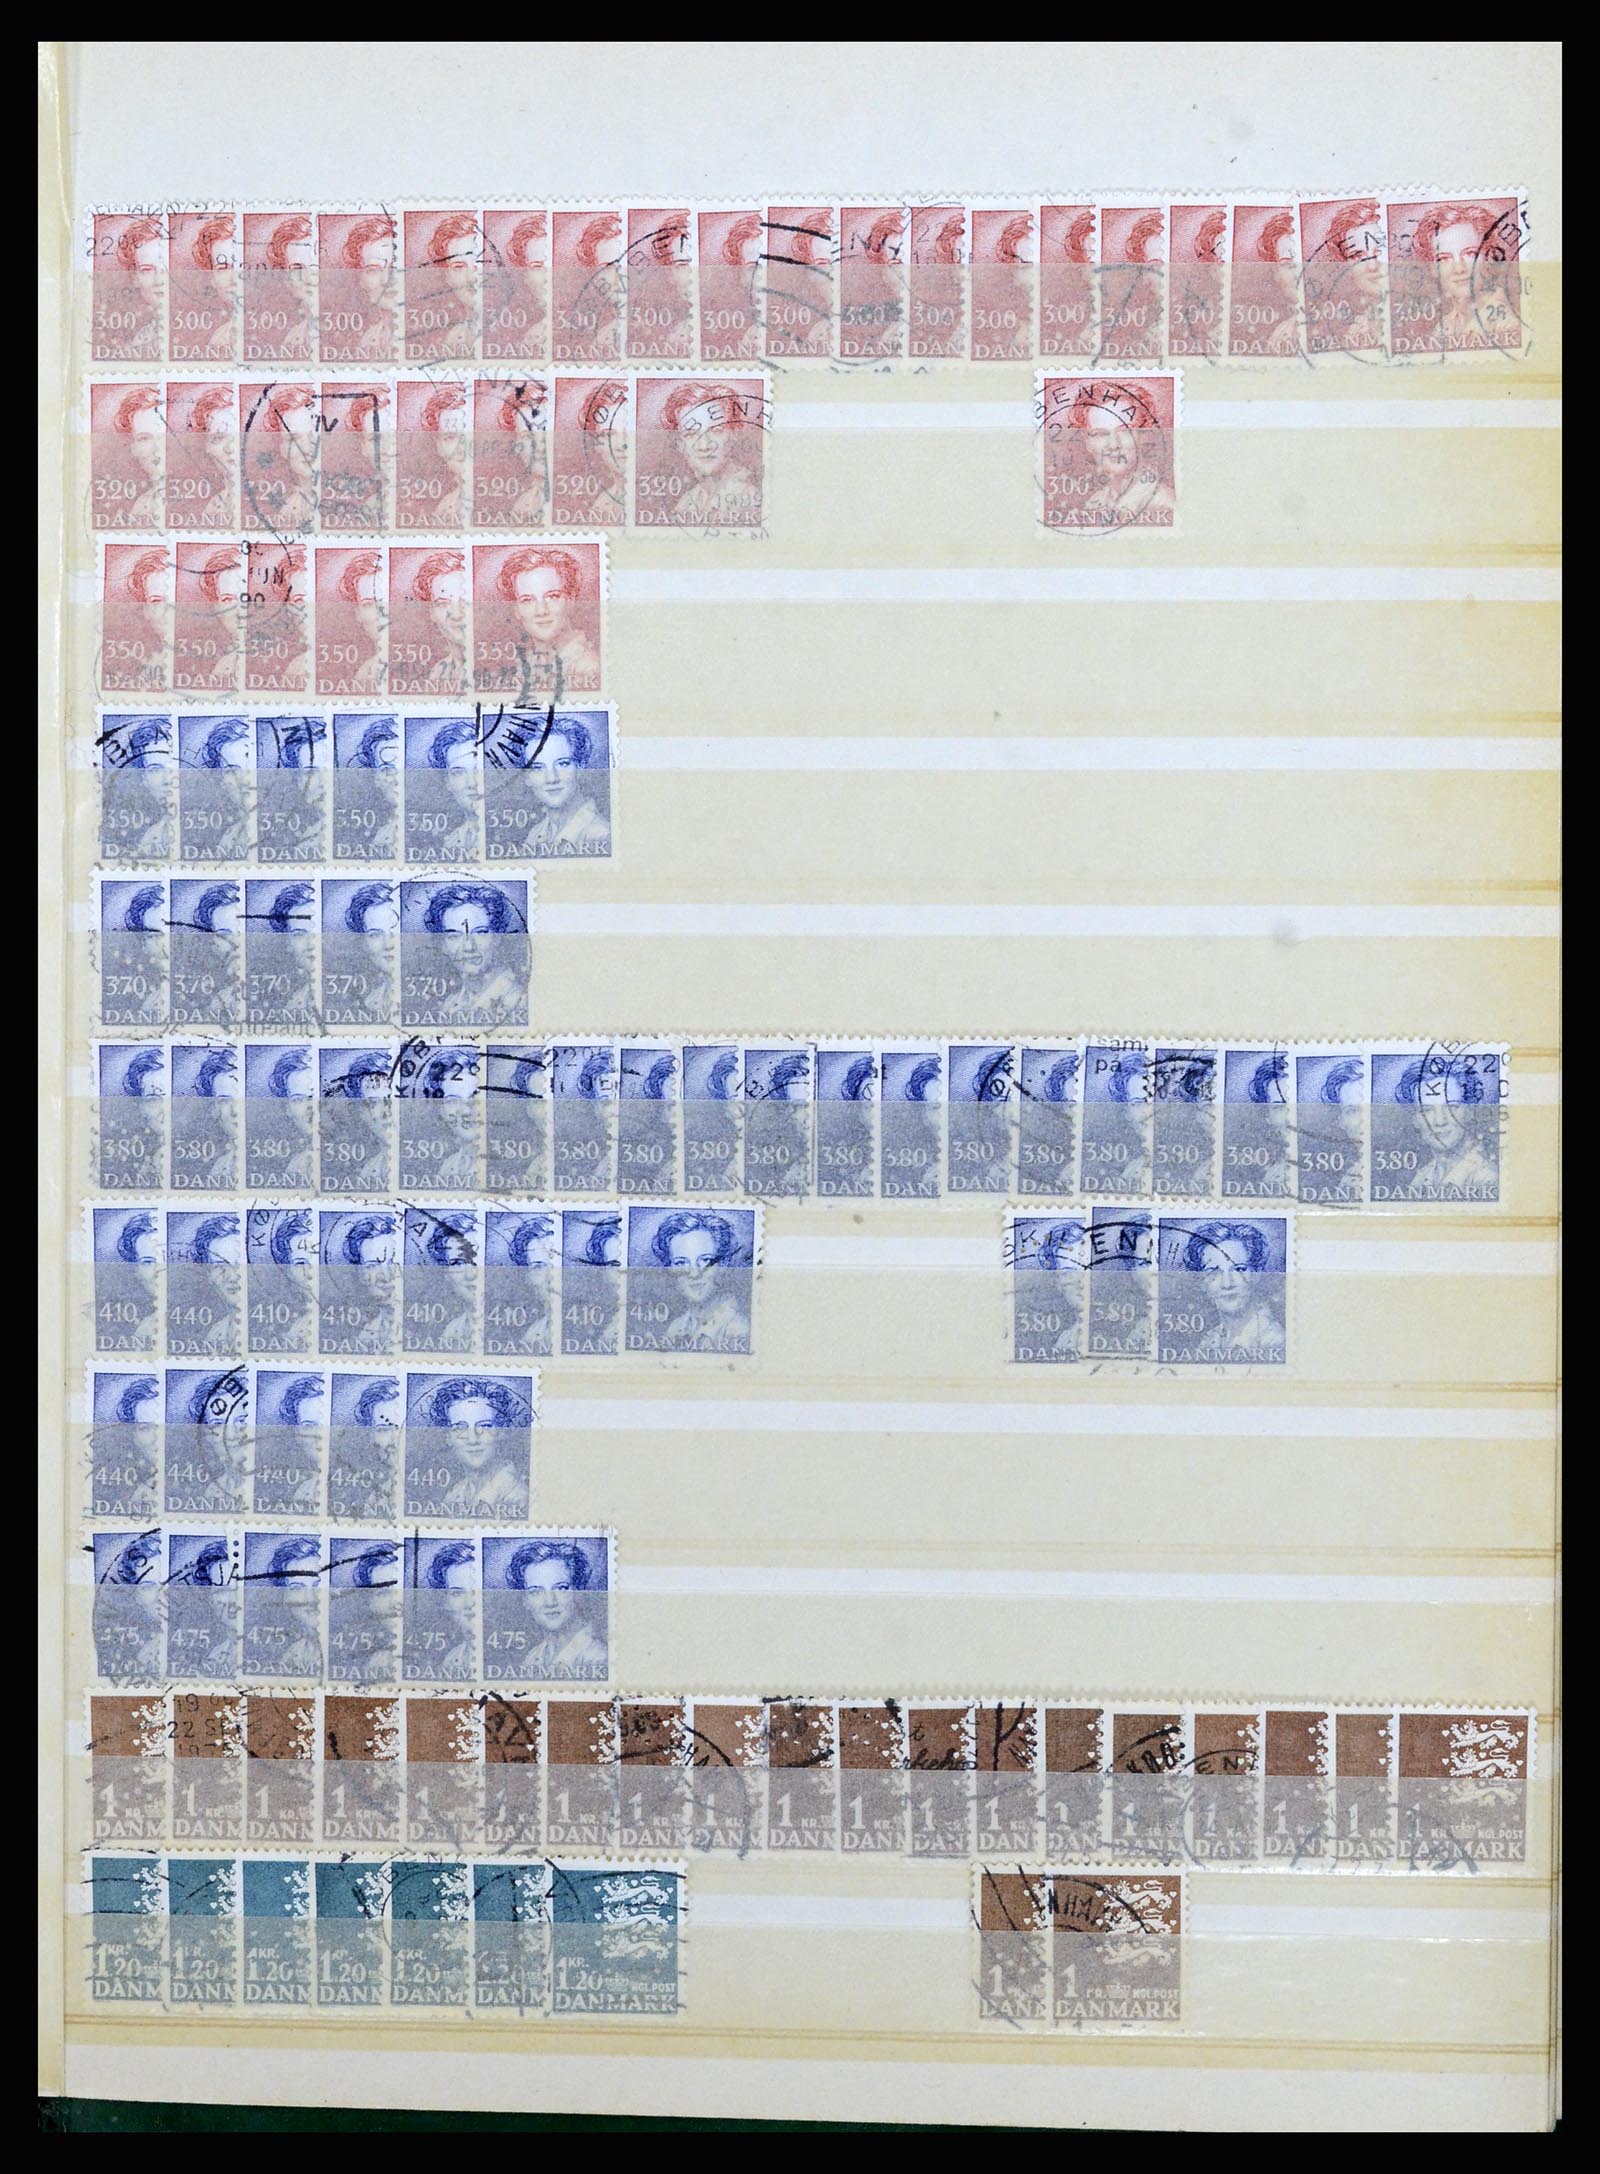 37056 034 - Stamp collection 37056 Denmark perfins.